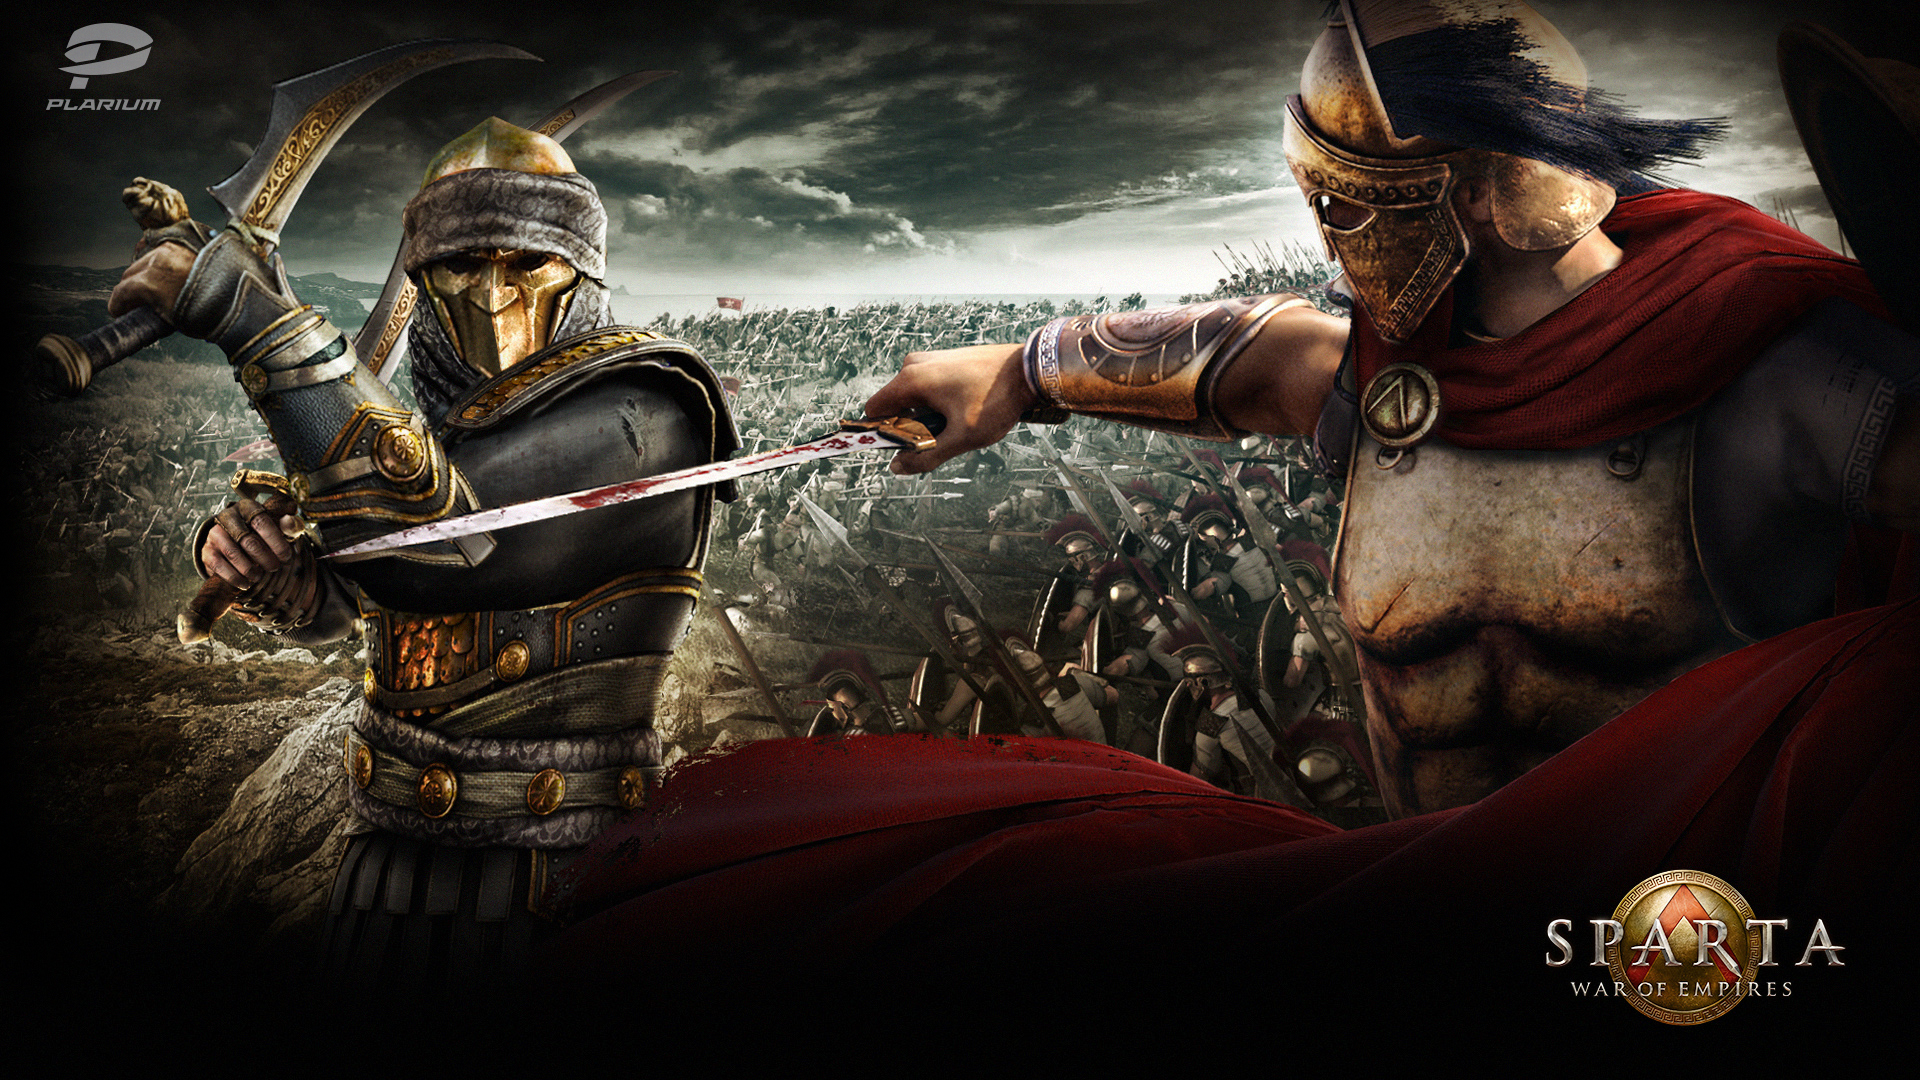 Sparta War of Empires wallpaper 6